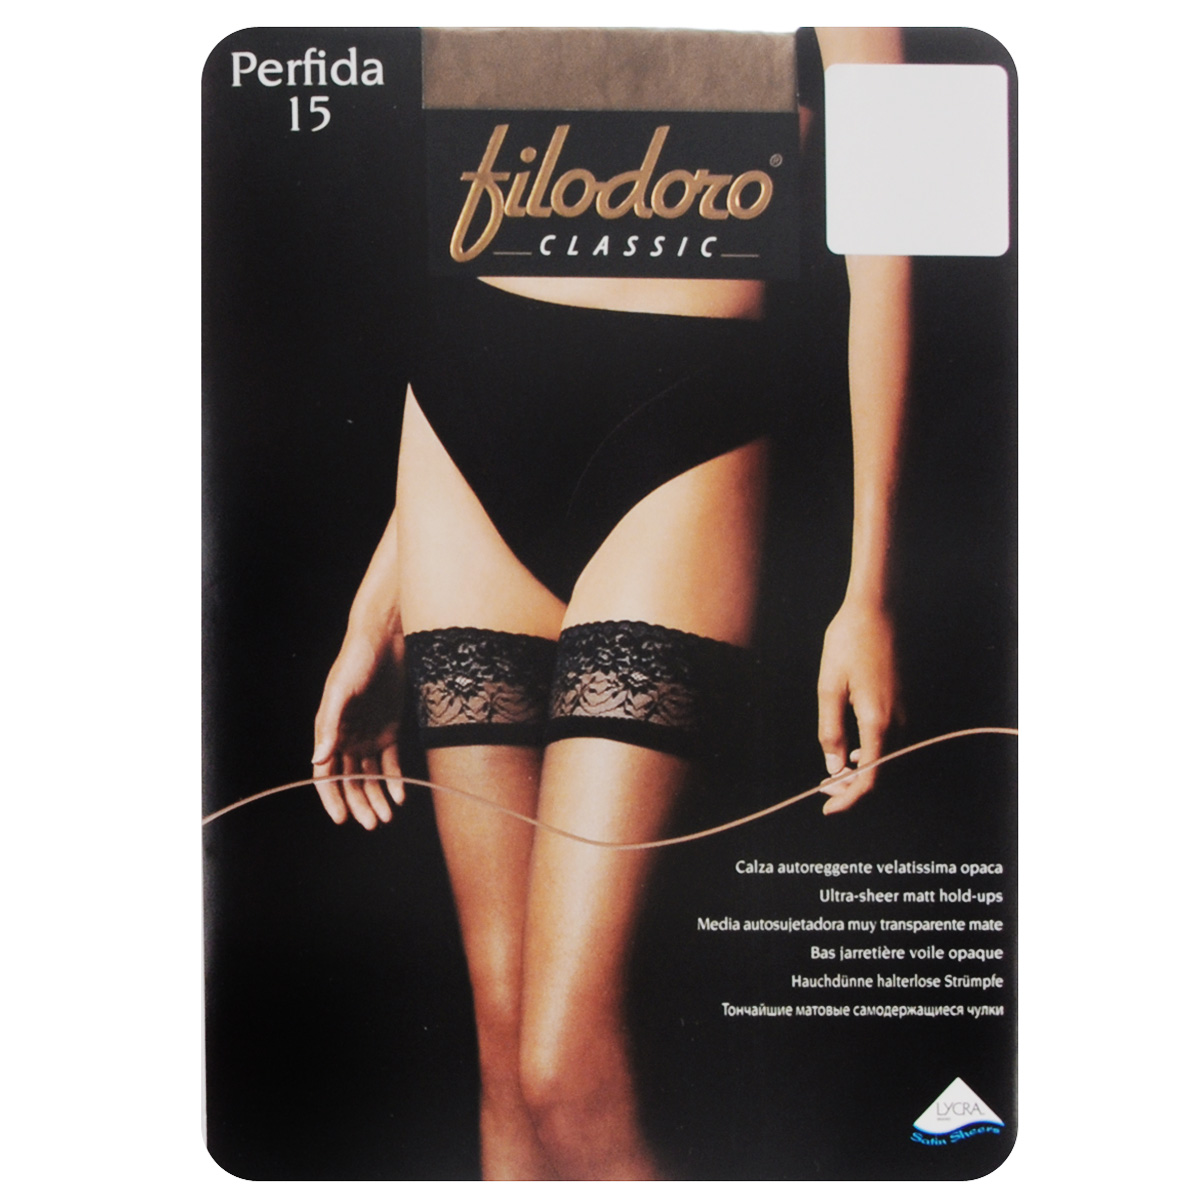  Perfida 15. C109850FC - Filodoro Classic - Filodoro ClassicC109850FC  Filodoro Classic Perfida        .  -   . : 15 den.